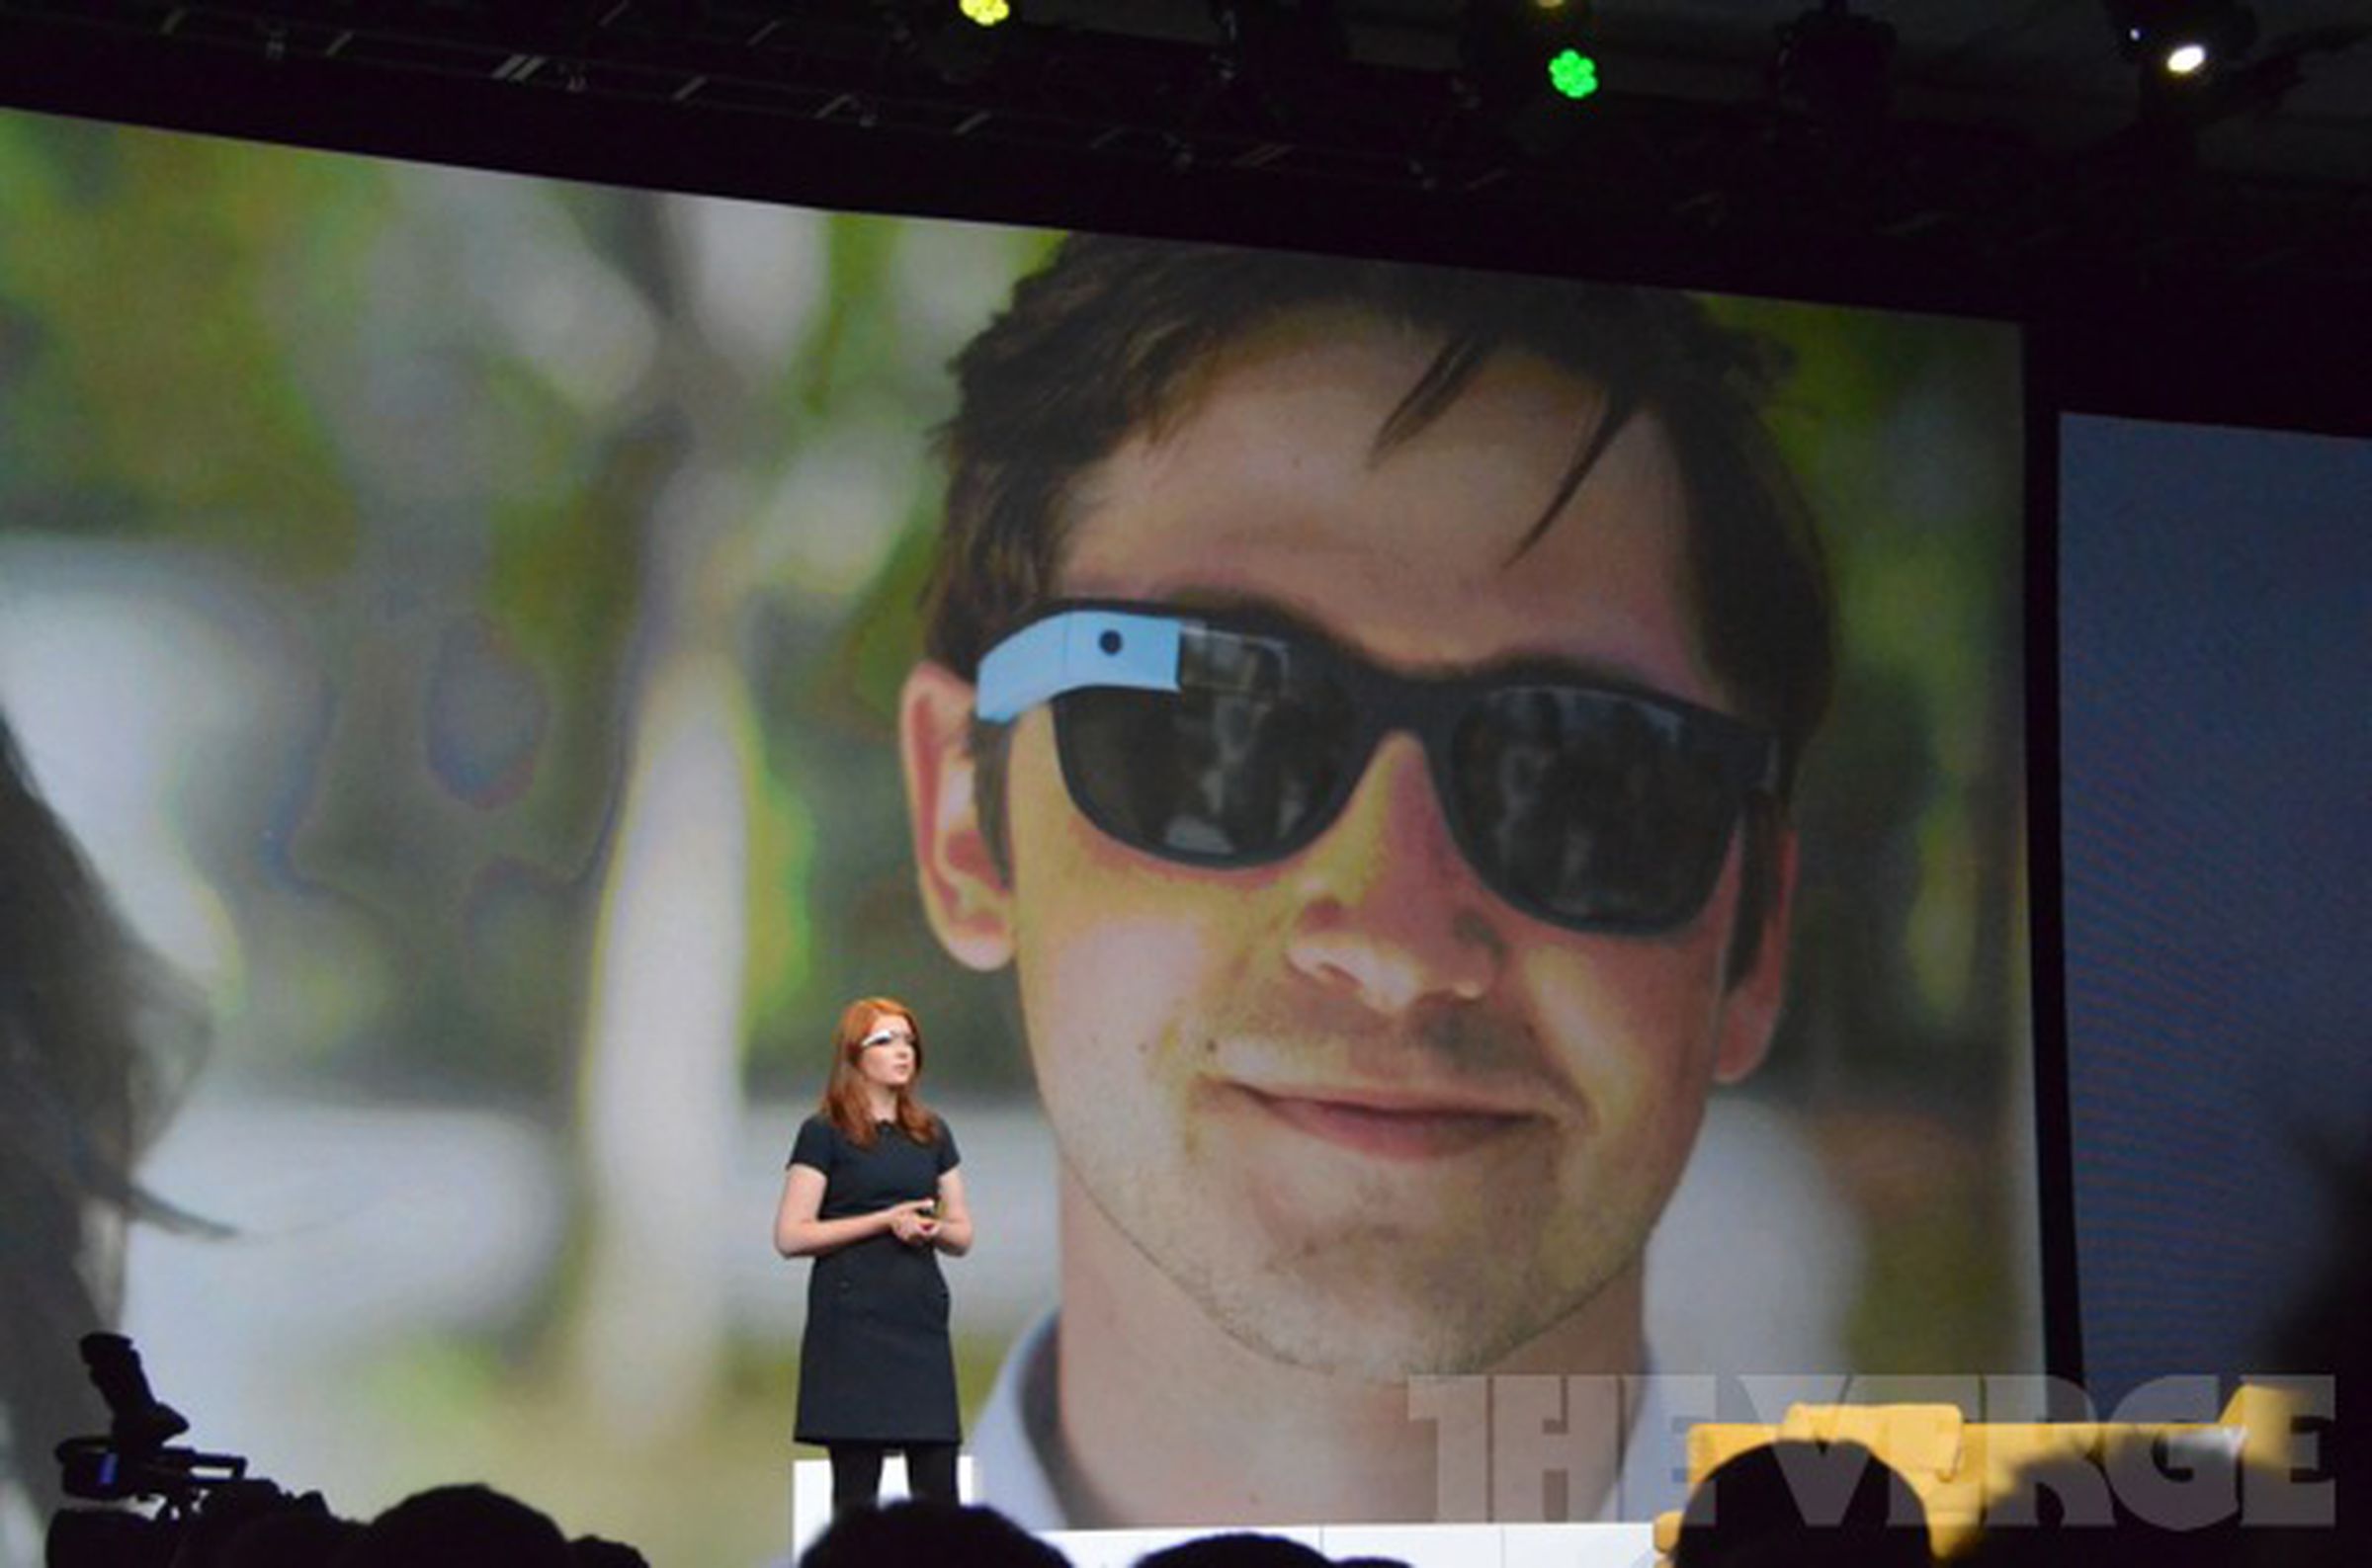 Liveblog images of Project Glass at Google I/O 2012